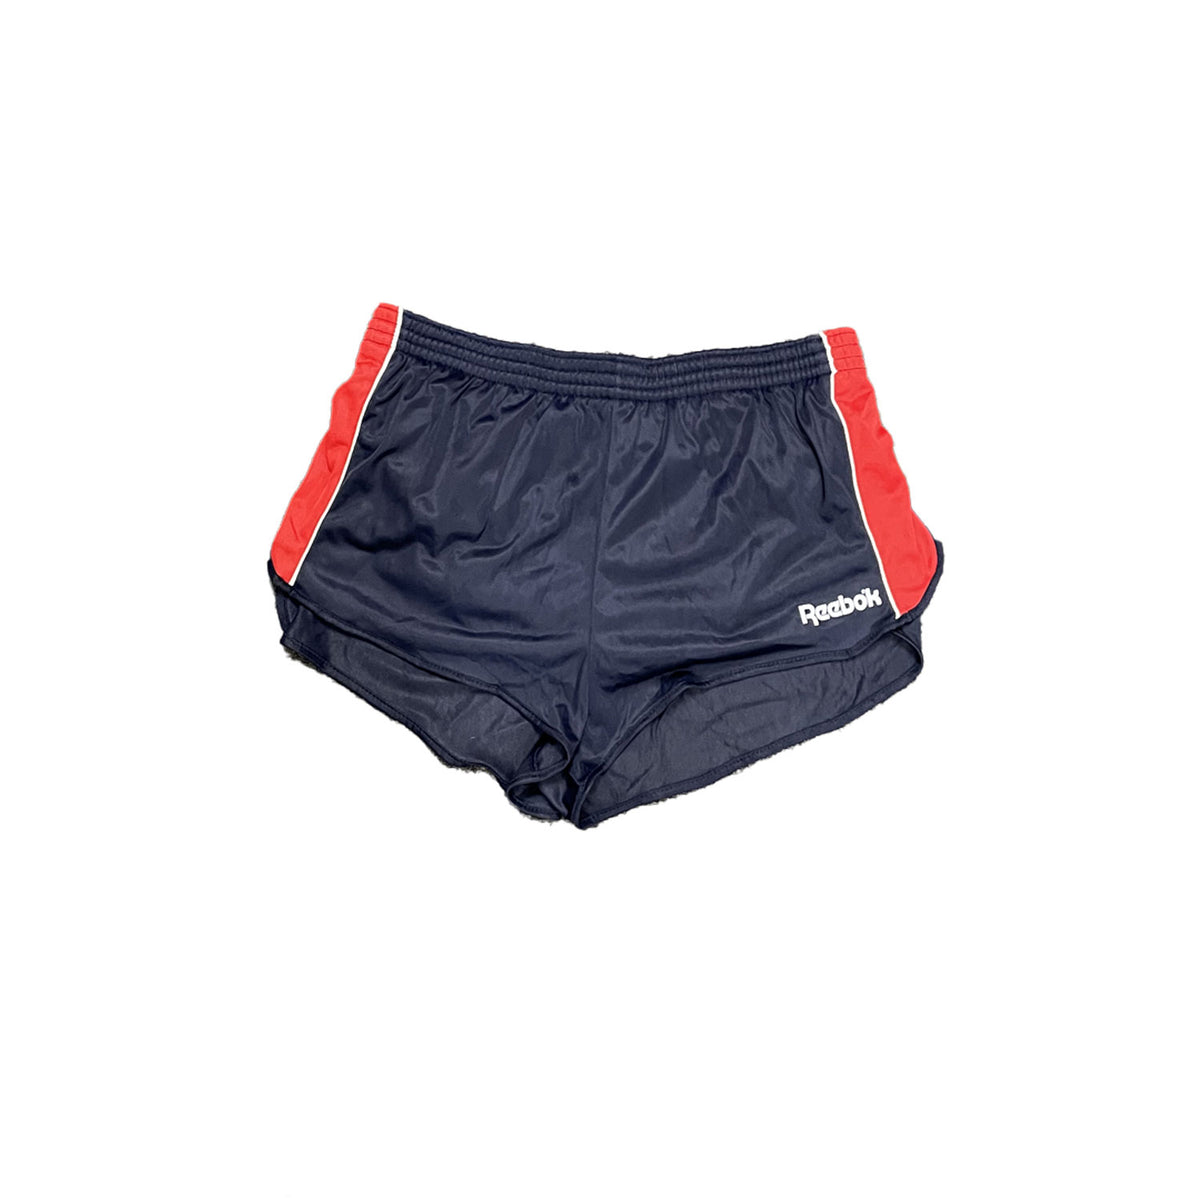 Reebok Original Clearance Contrast Womens Sport Shorts